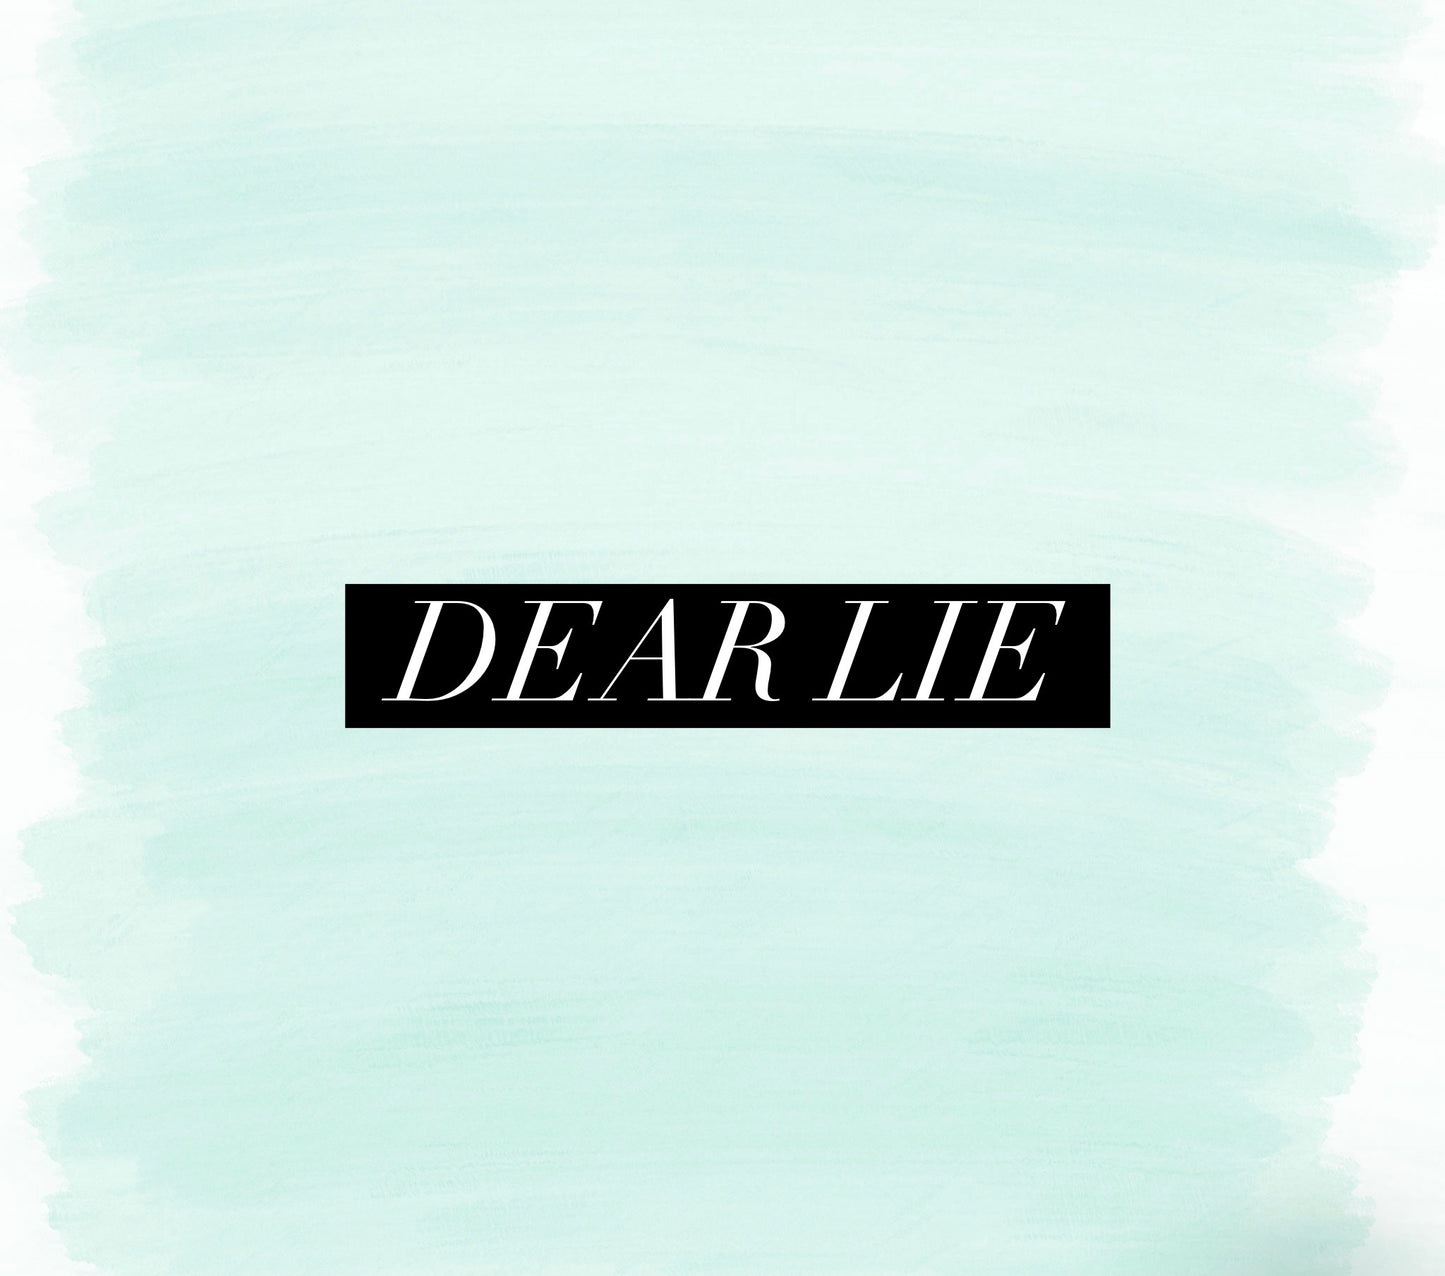 Dear lie (Special Order)